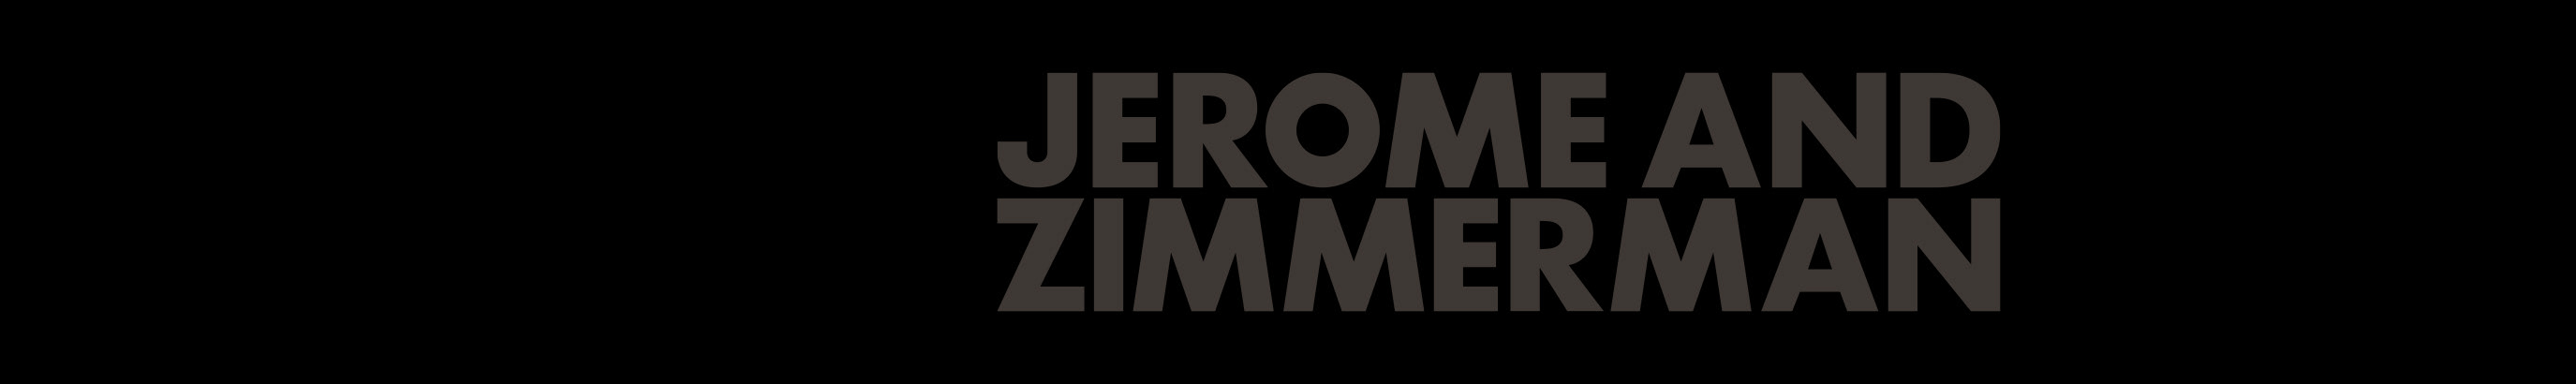 Jerome & Zimmerman's profile banner